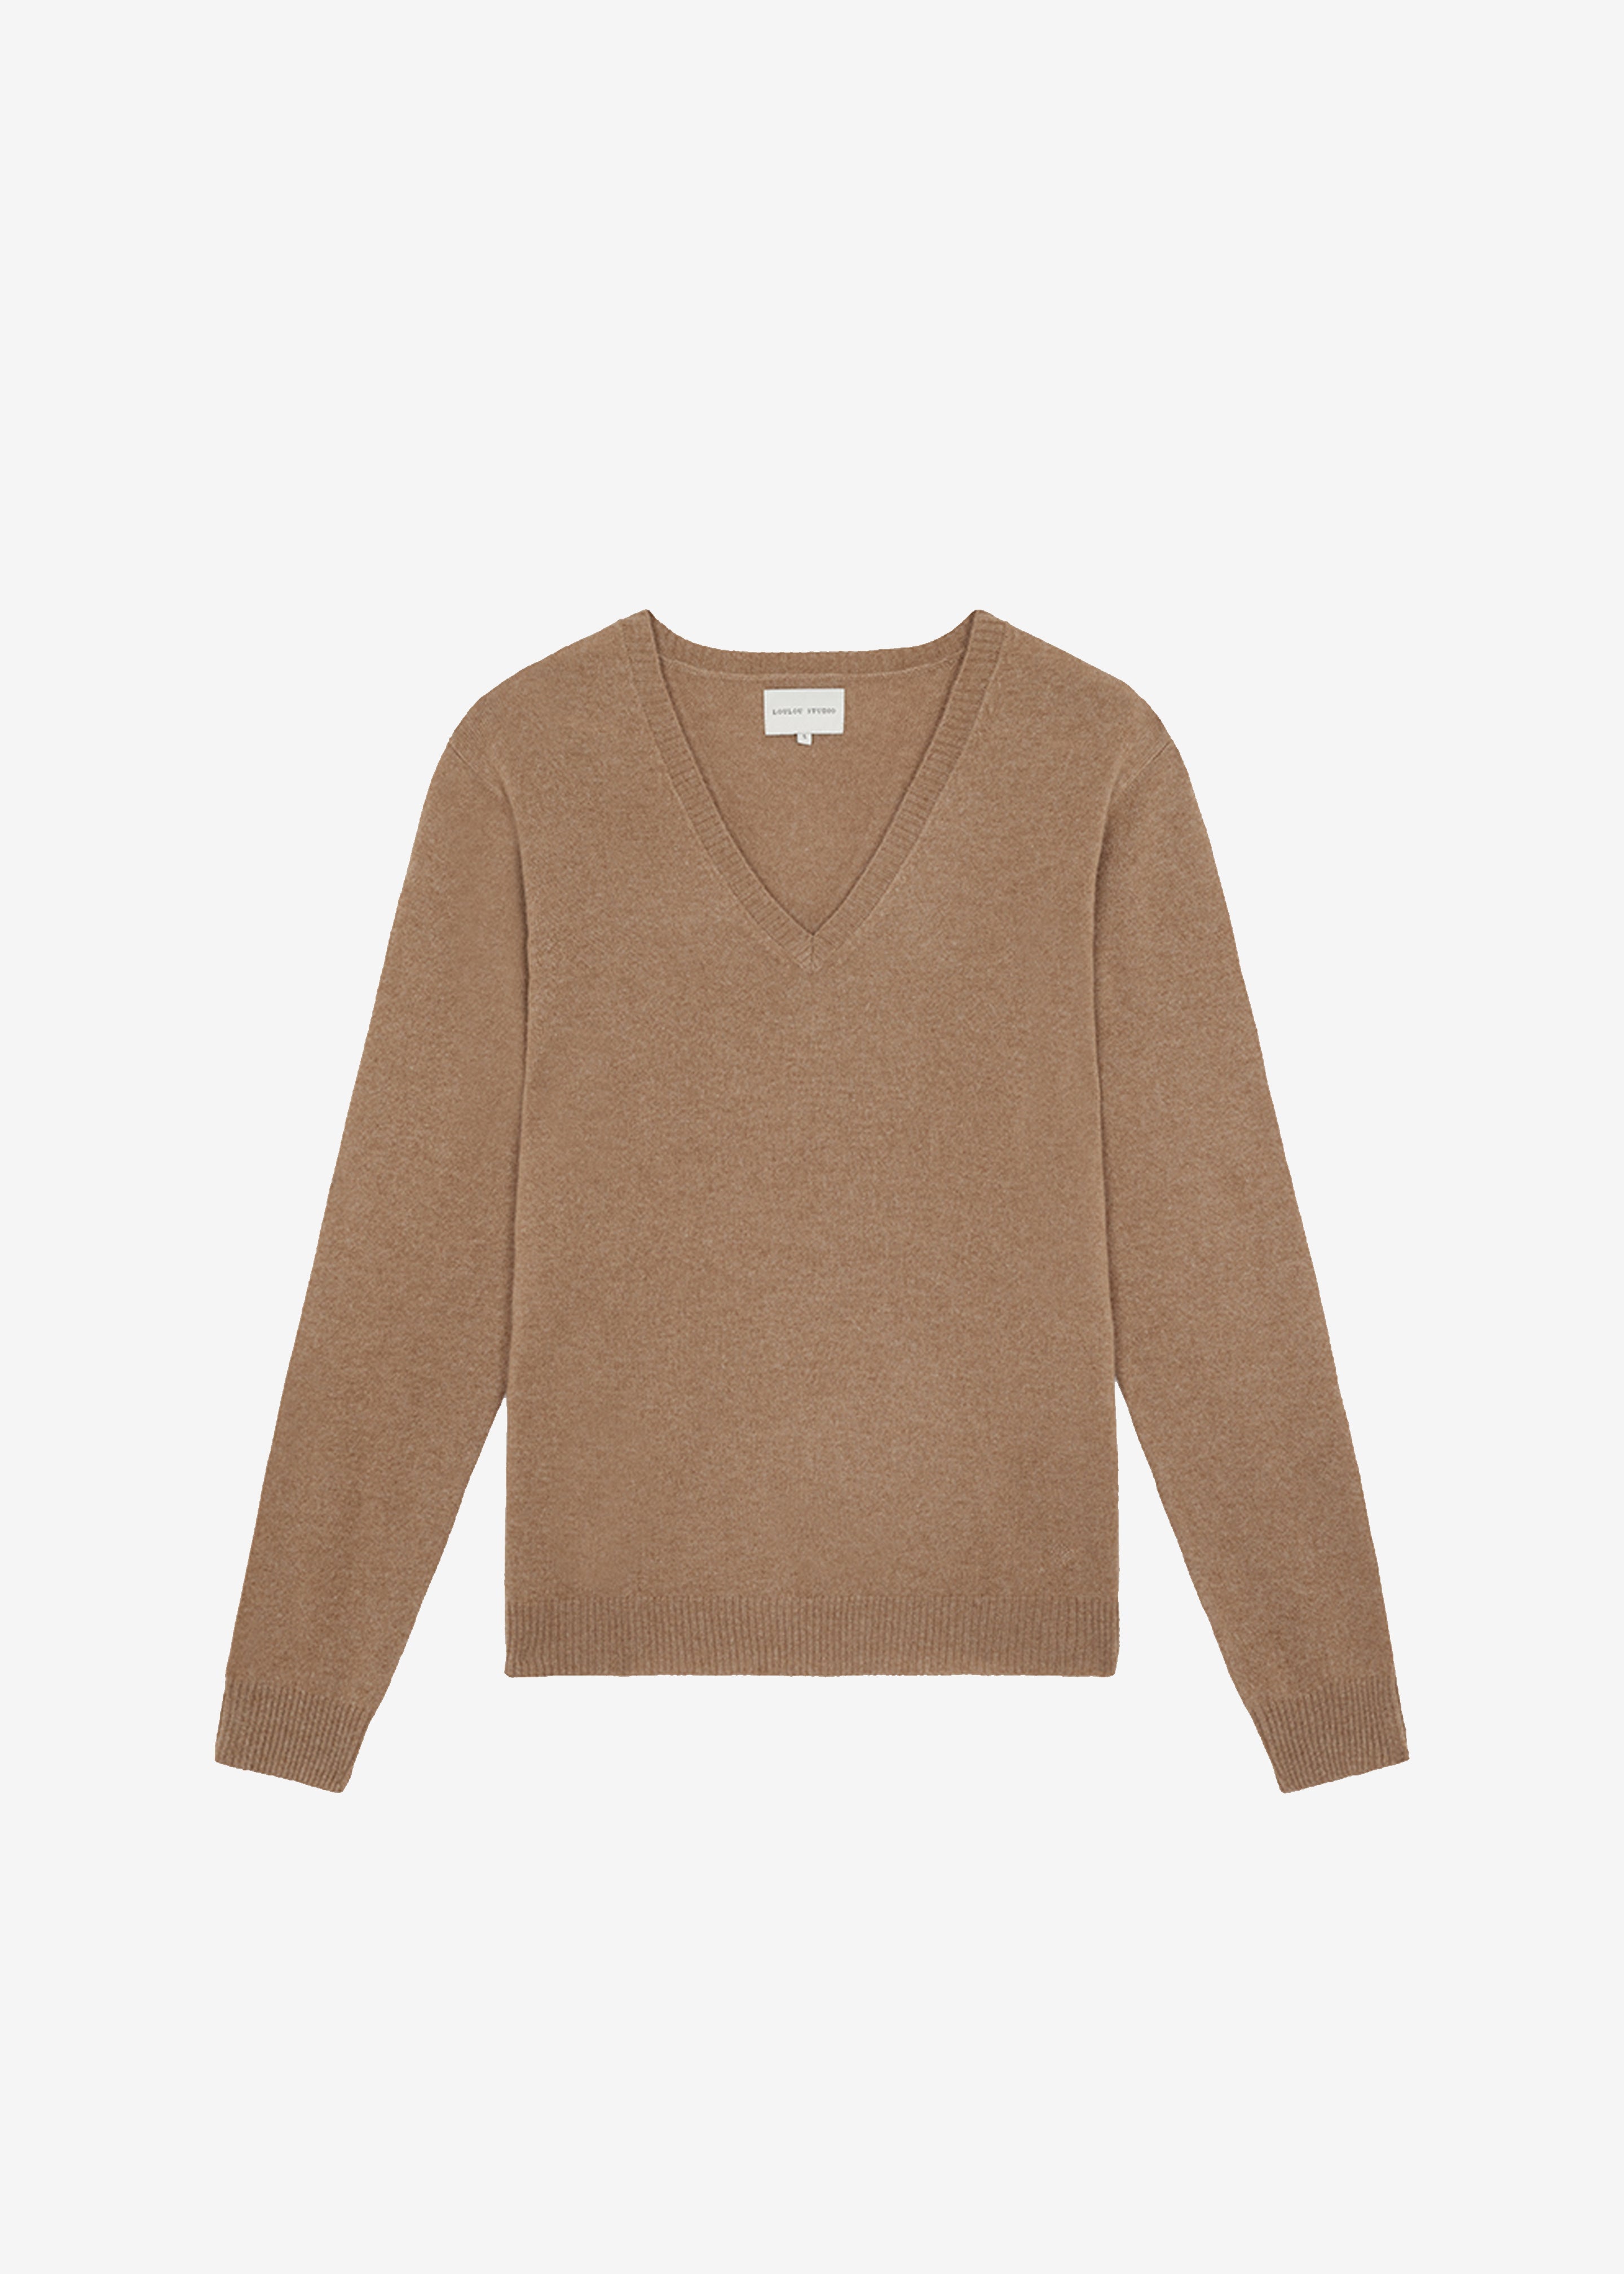 Loulou Studio Serafini V Neck Cashmere Sweater - Sand Melange - 5